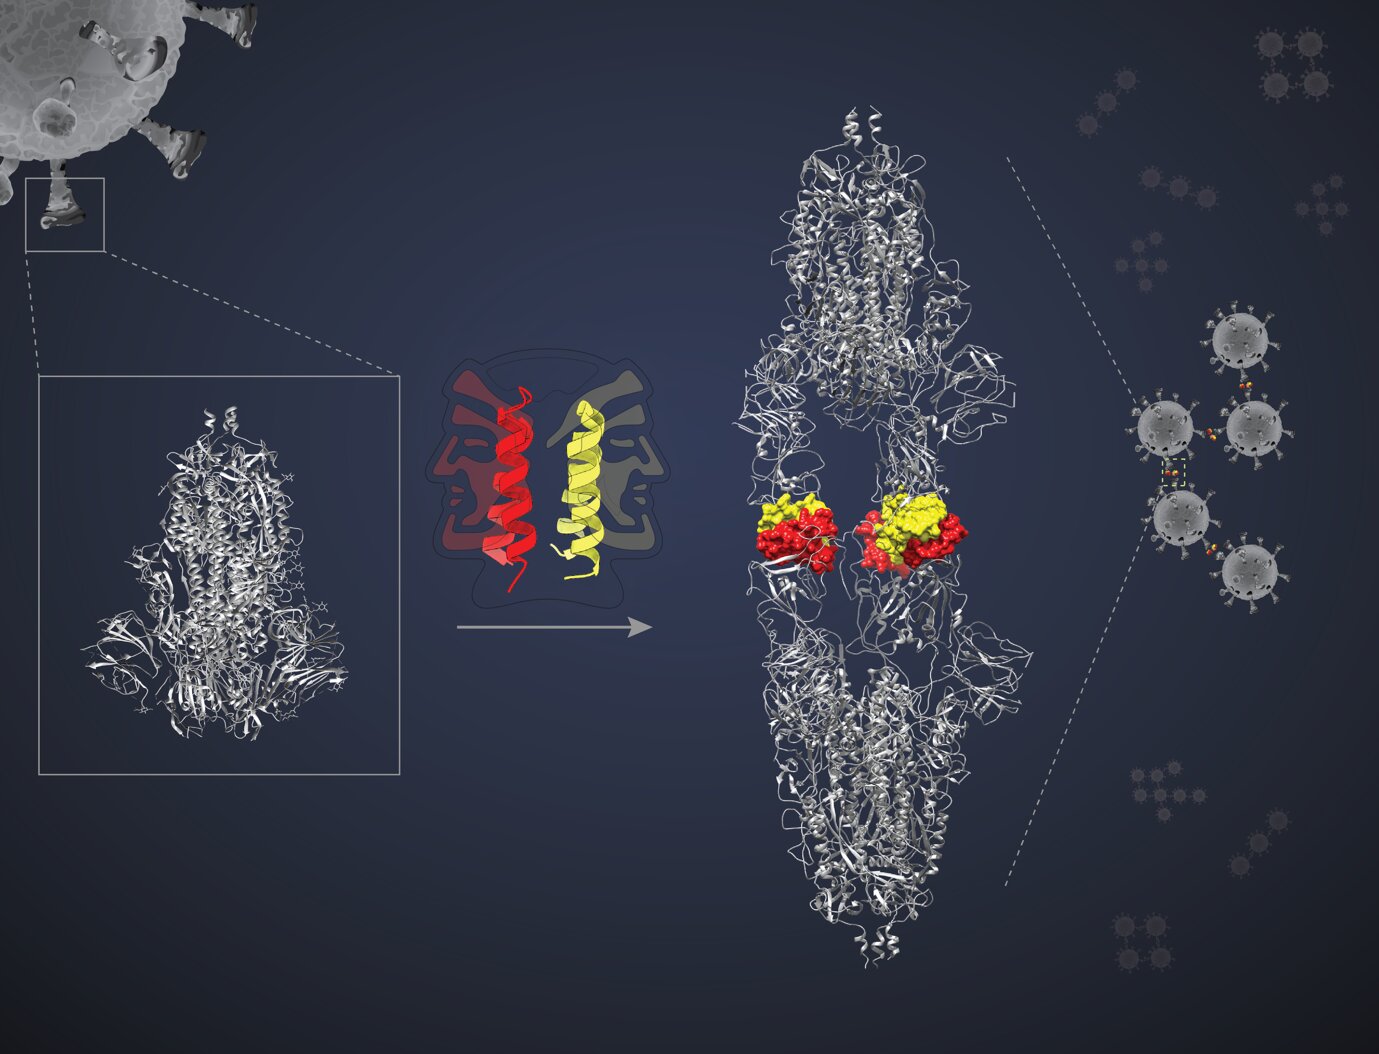 【Nature子刊】新的小蛋白对病毒蛋白发起“双管齐下攻击”